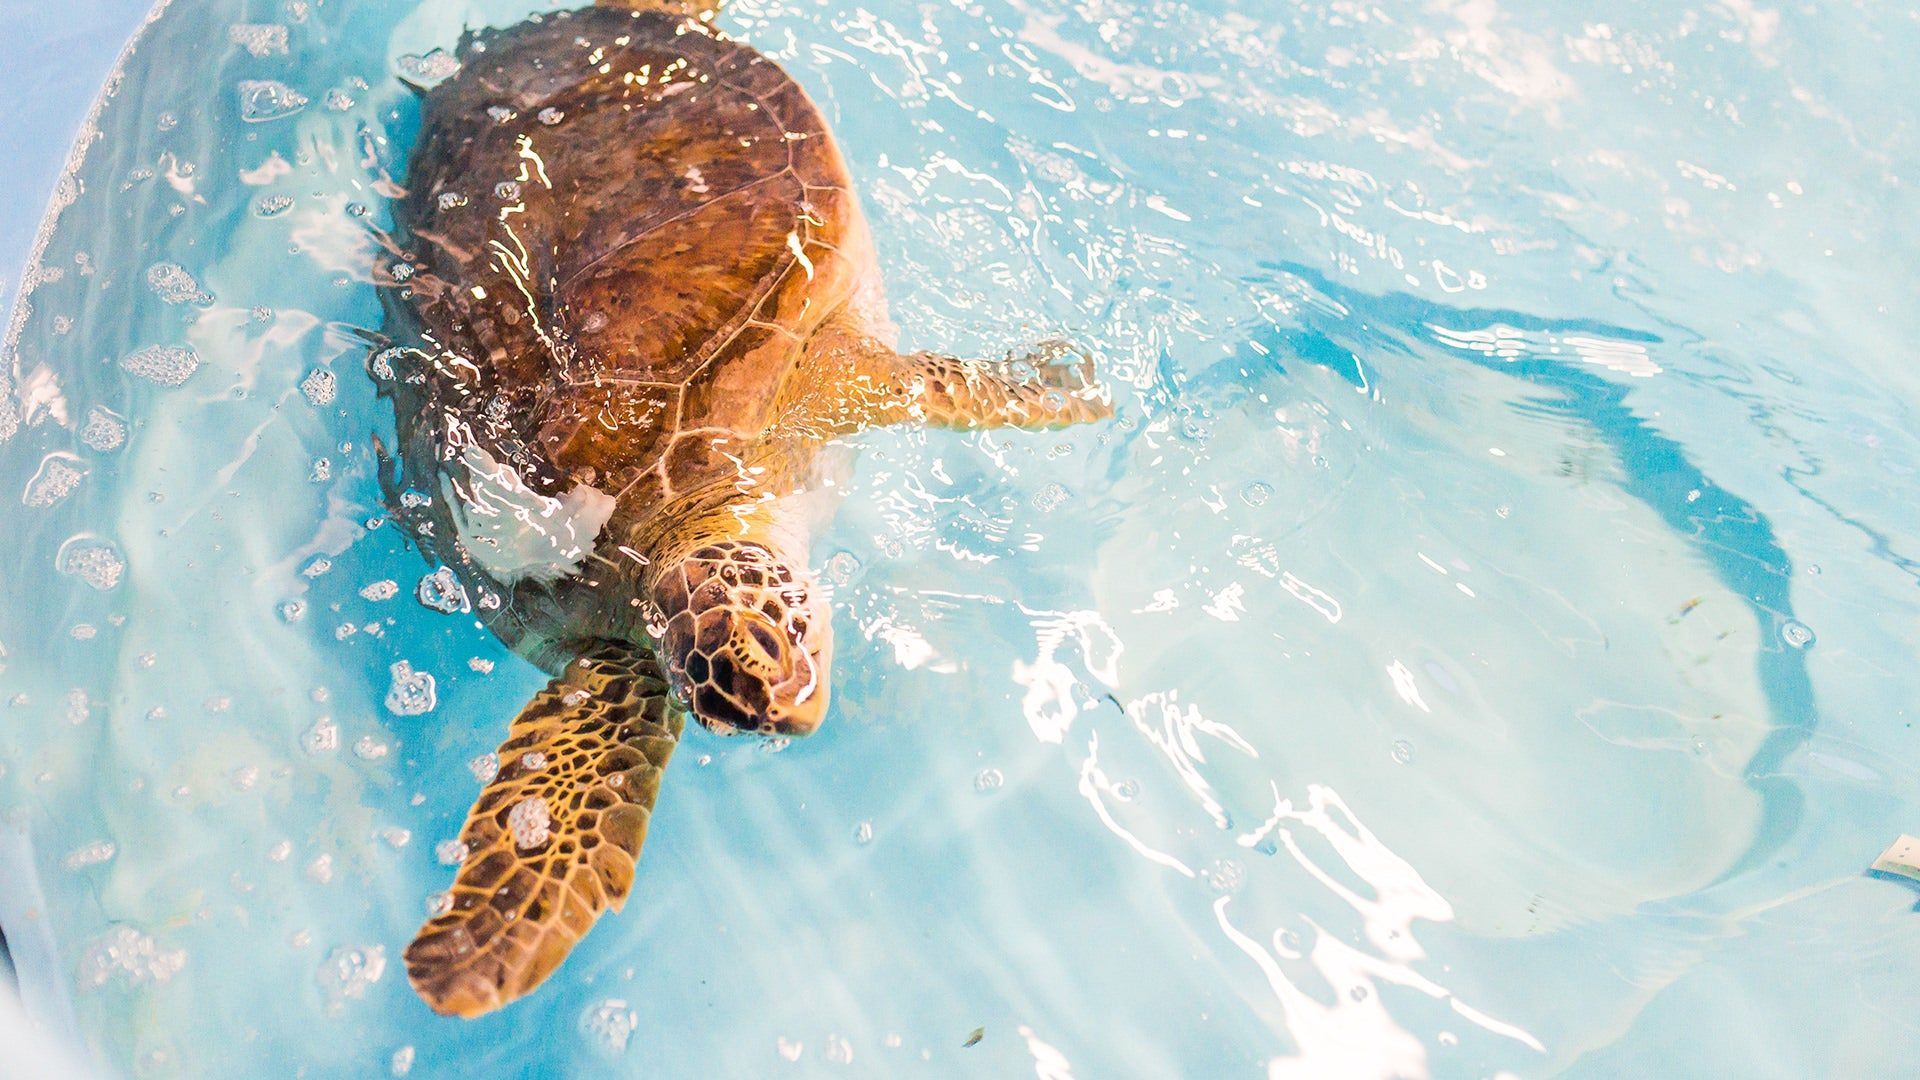 A turtle swimming in a pool - Sea turtle